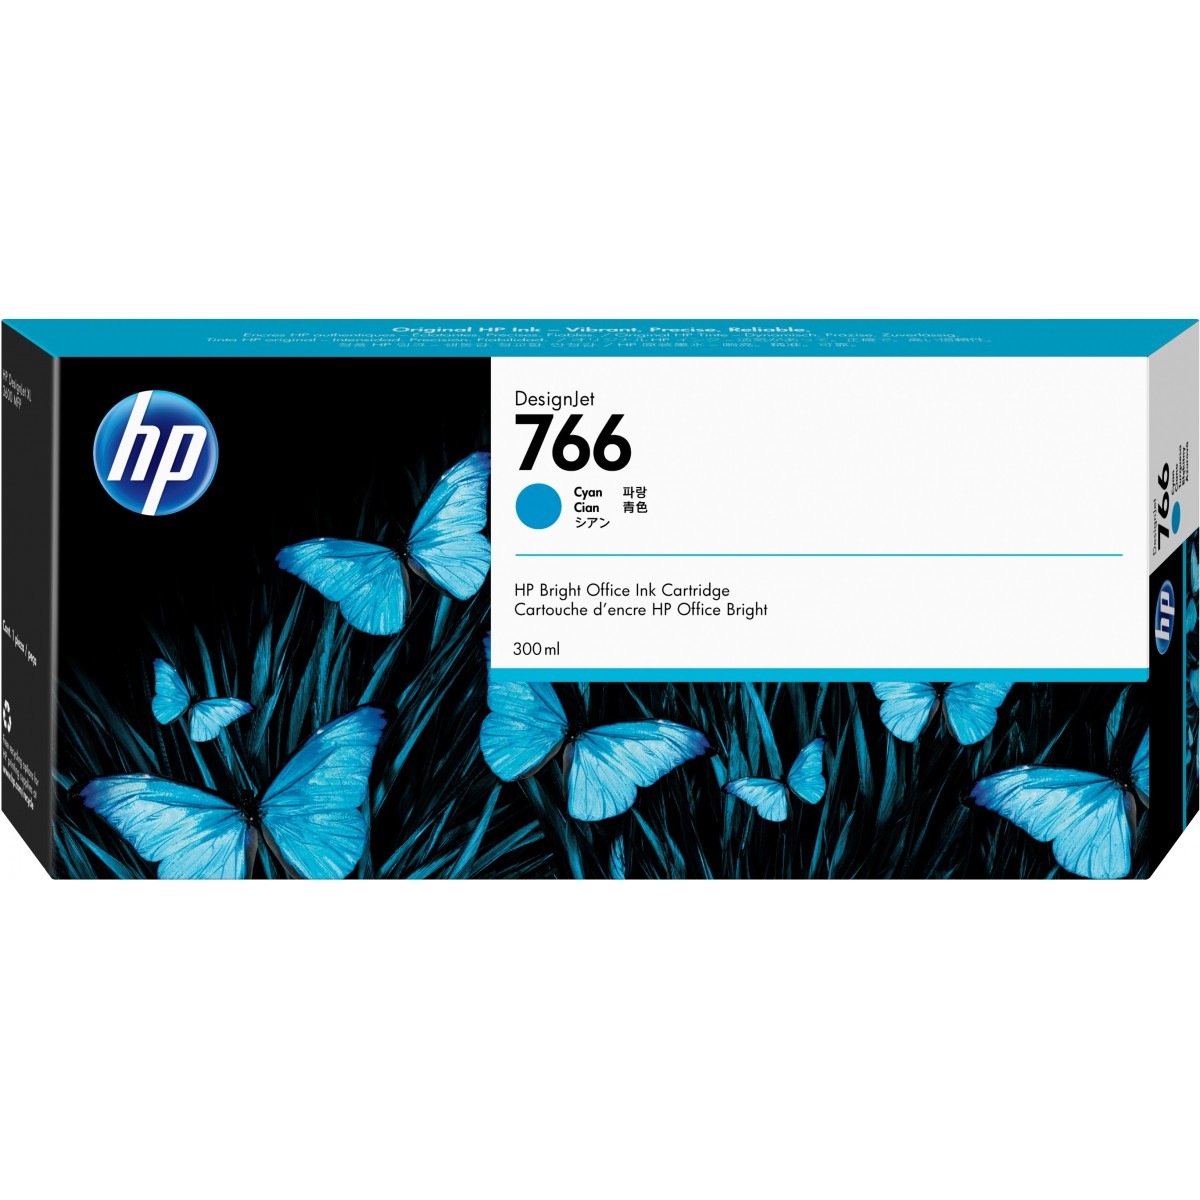 HP 766 - Original - Dye-based ink - Cyan - HP - HP DesignJet XL 3600 - 1 pc(s)